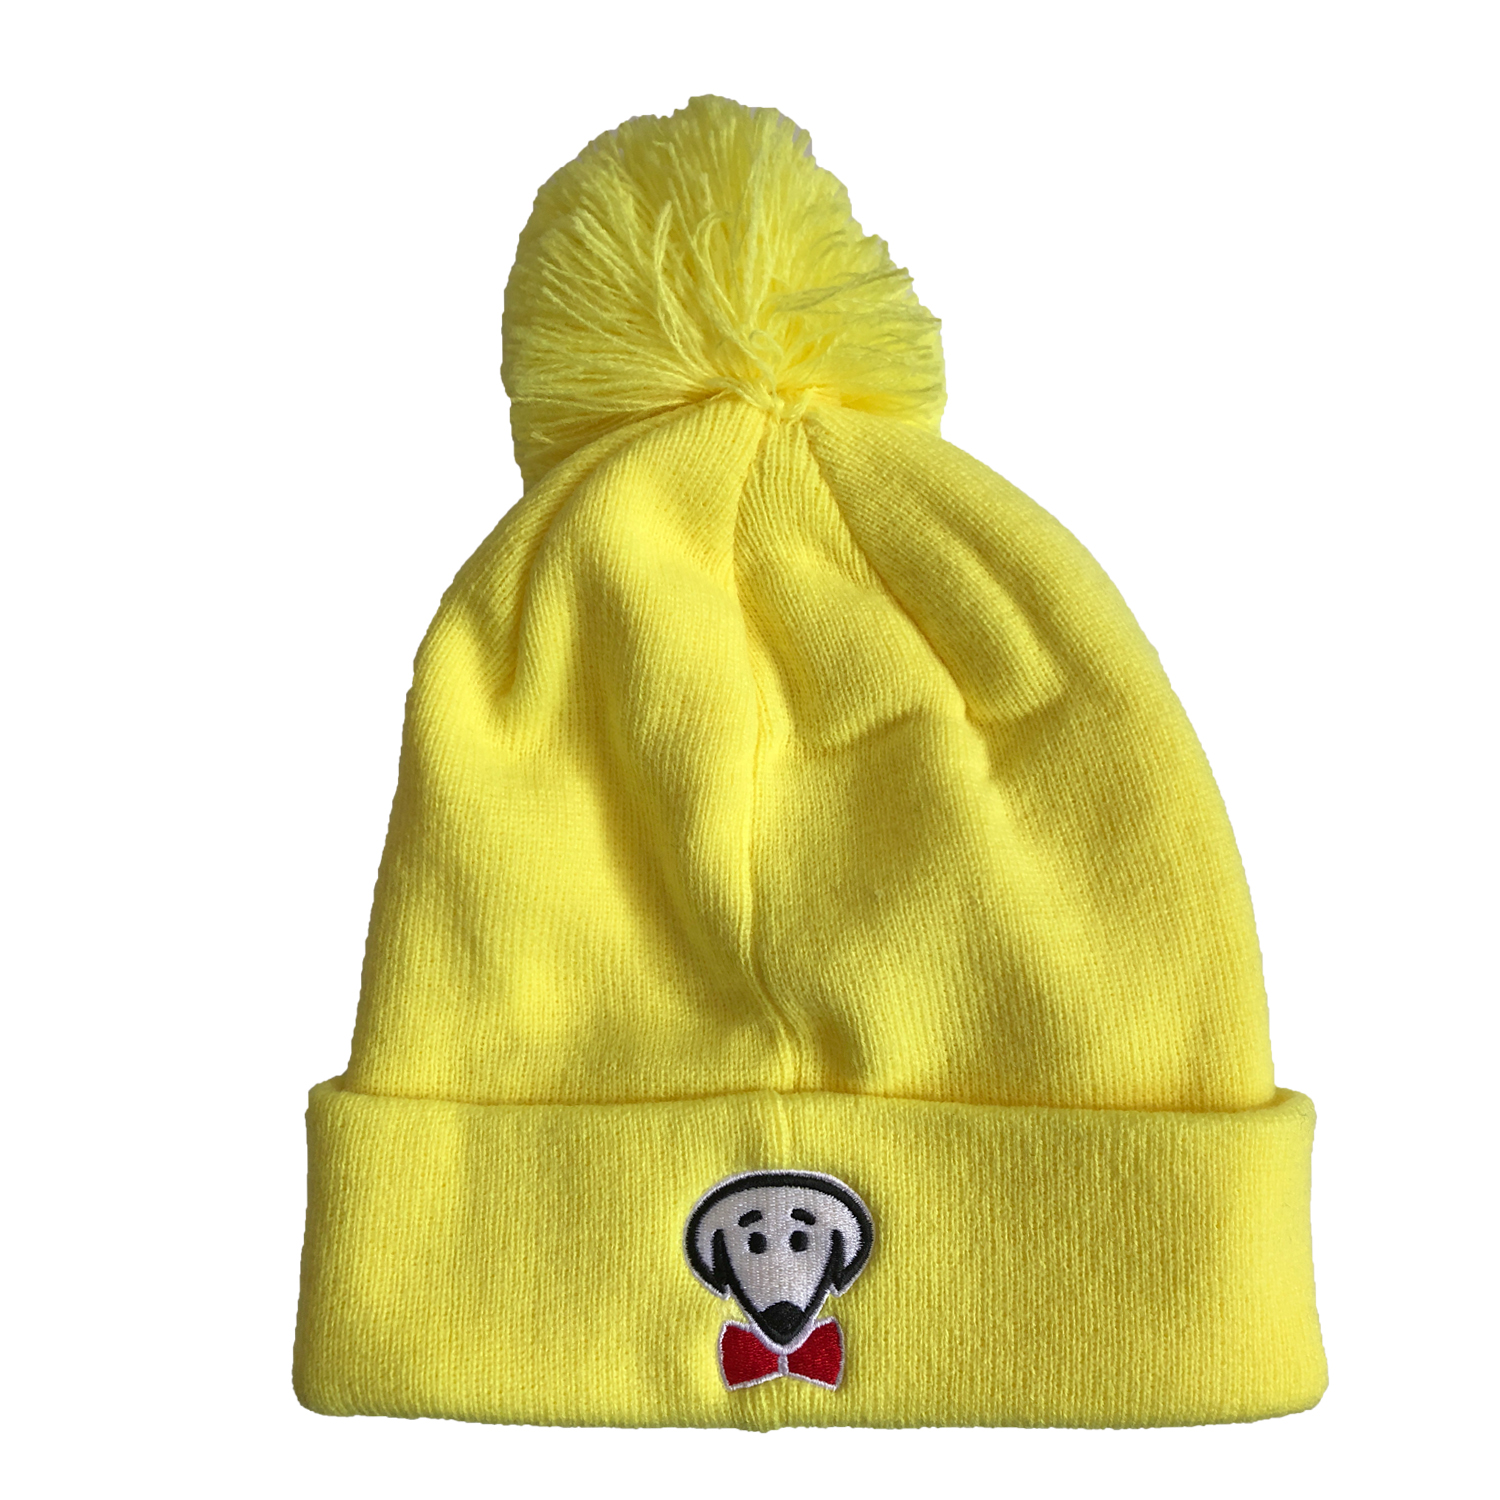 Beau Tyler - RockStar winter knit hat power yellow back - maybe temp